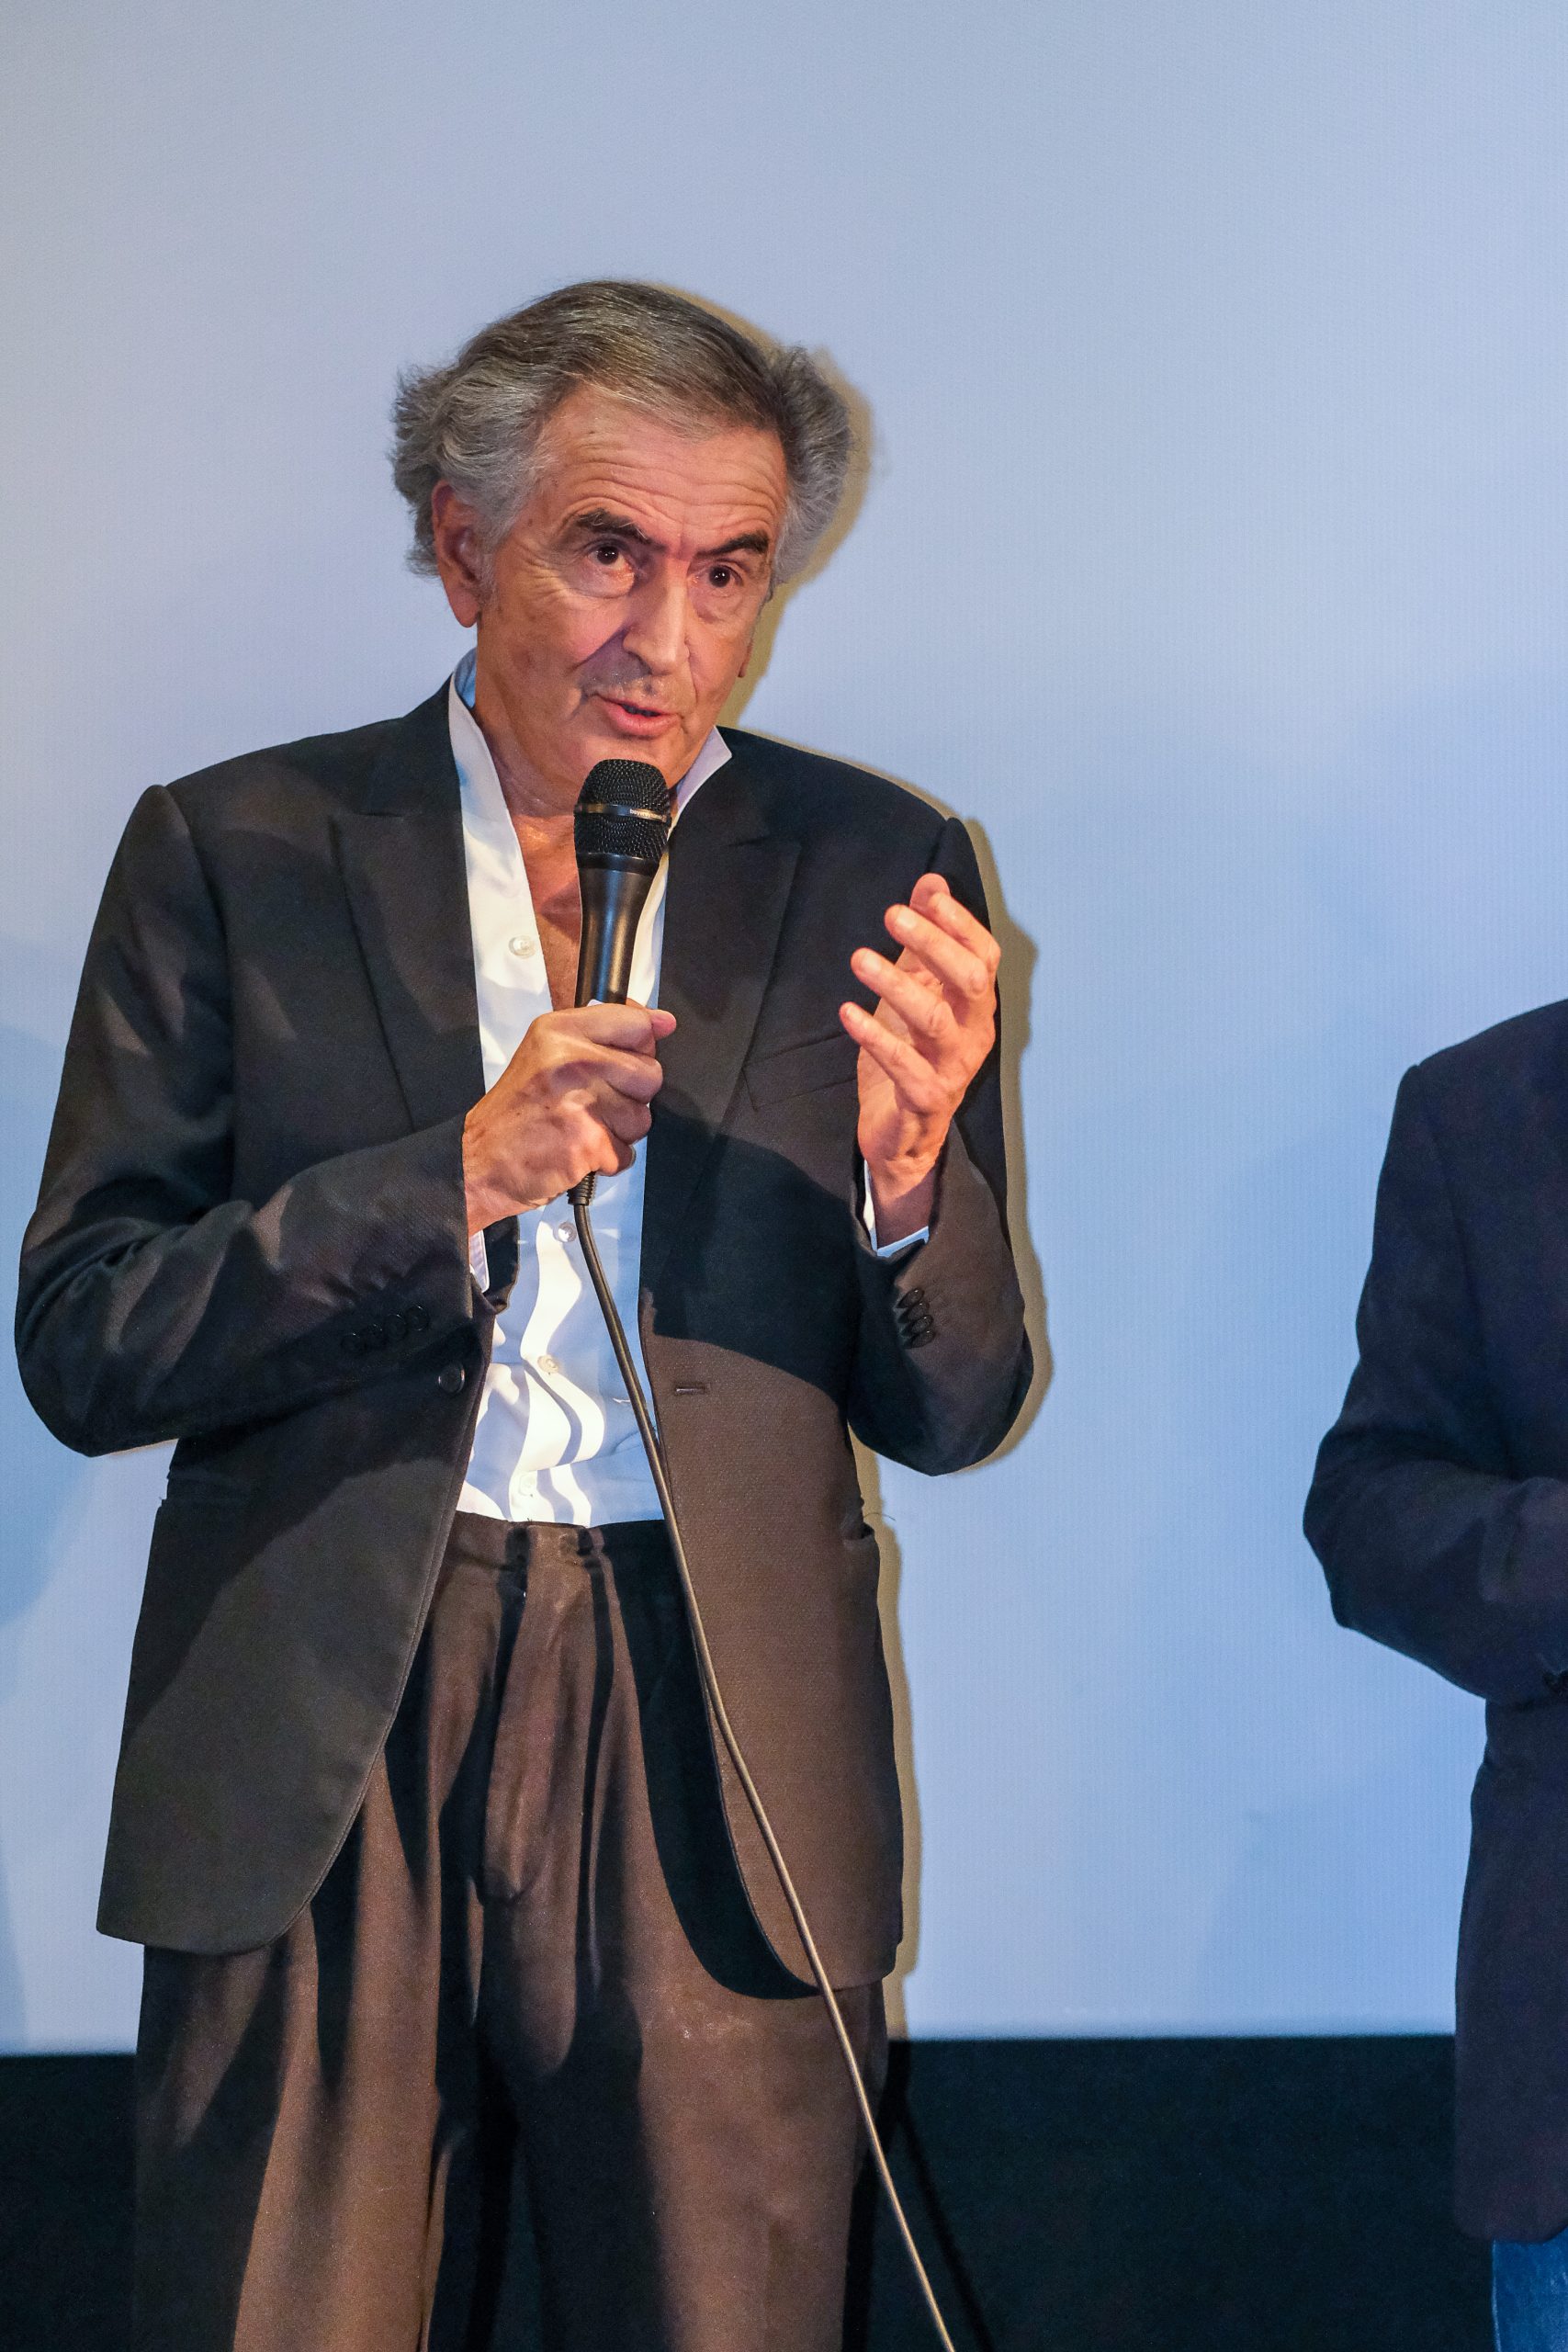 Bernard-Henri Lévy presents his film "Why Ukraine" at the Cinema Le Balzac in Paris.